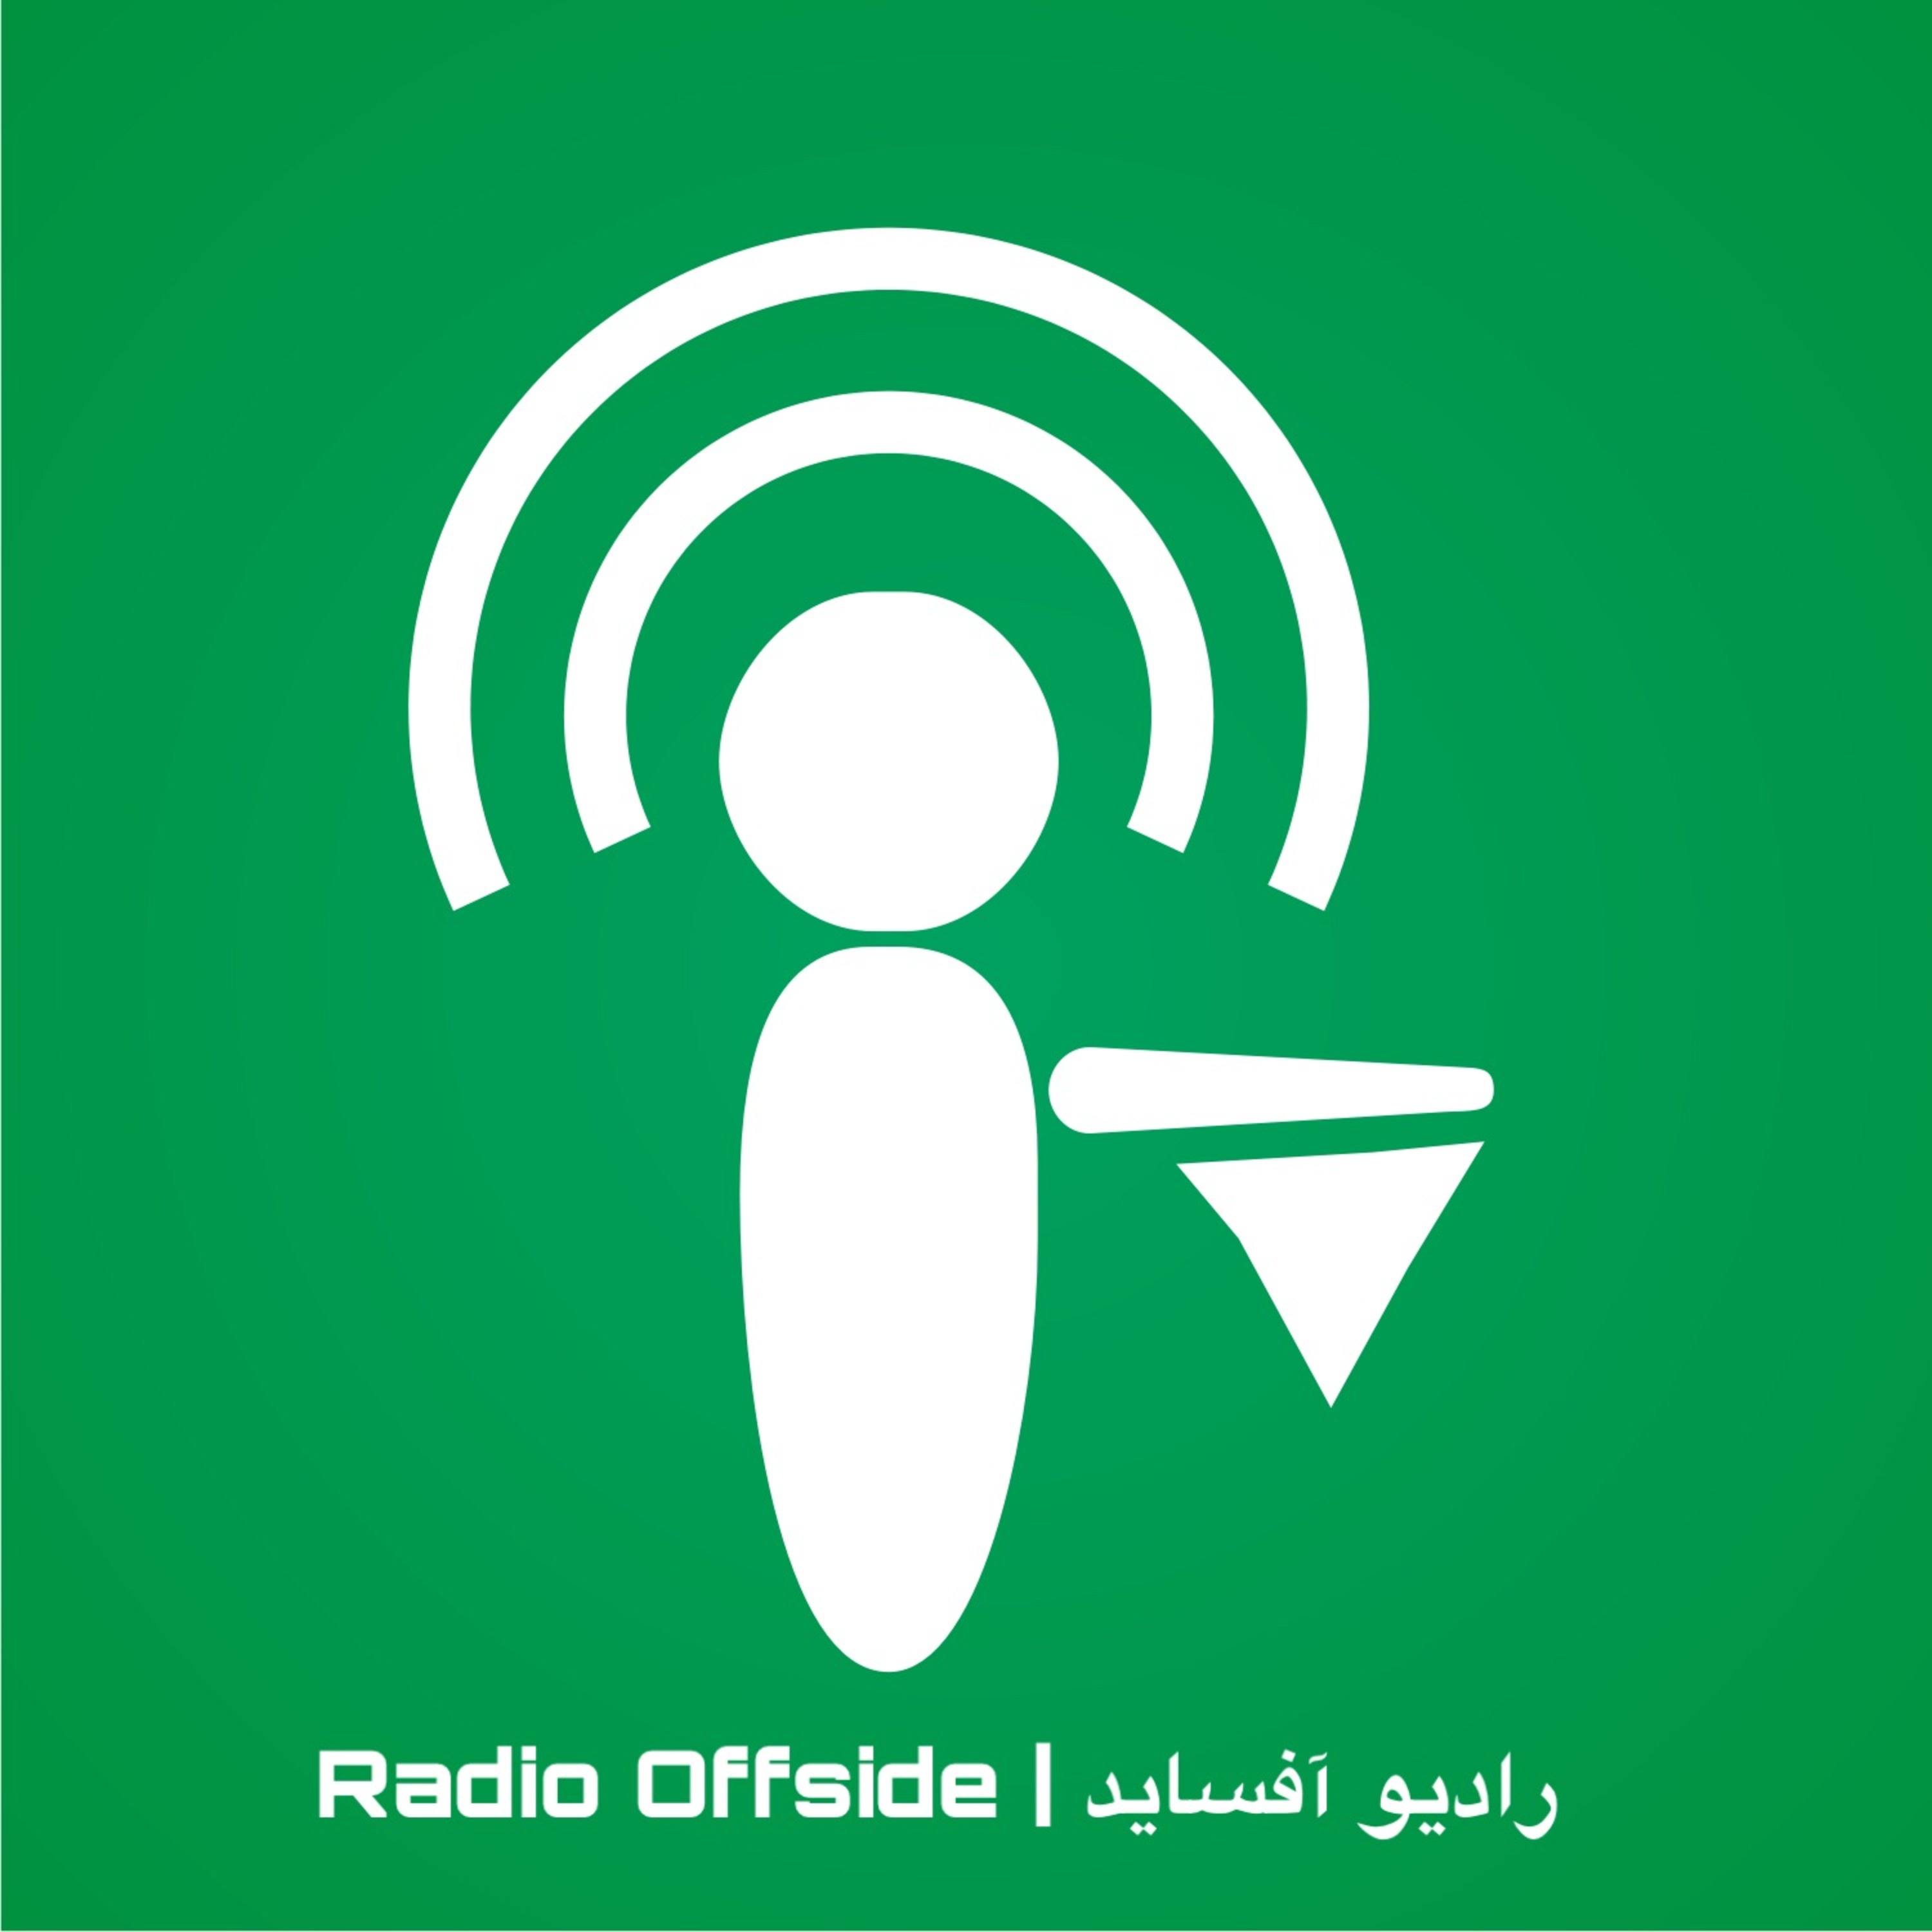 Radio Offside | پادکست فوتبالی رادیو آفساید:RadioOffside | رادیو آفساید